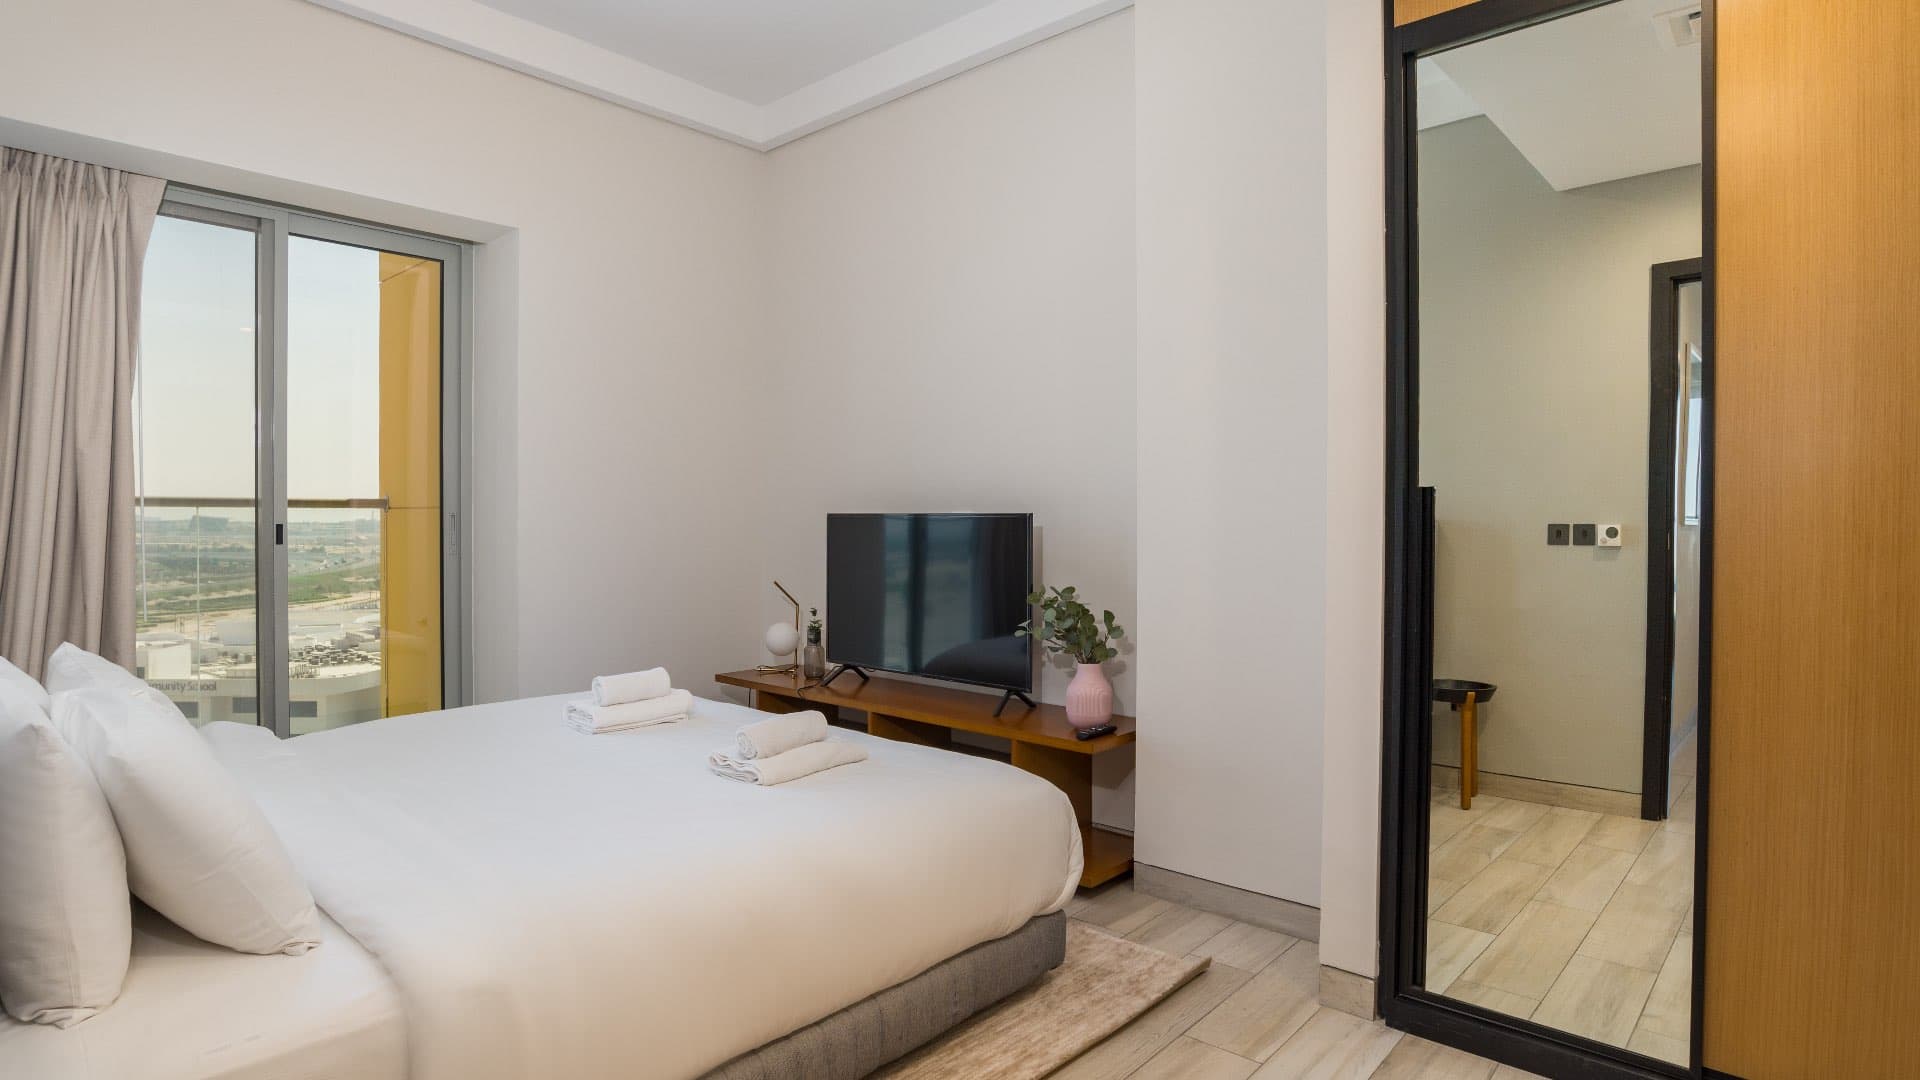  Bedroom Serviced Residences For Sale Al Barsha South Lp08406 1d6442f5dc901900.jpg